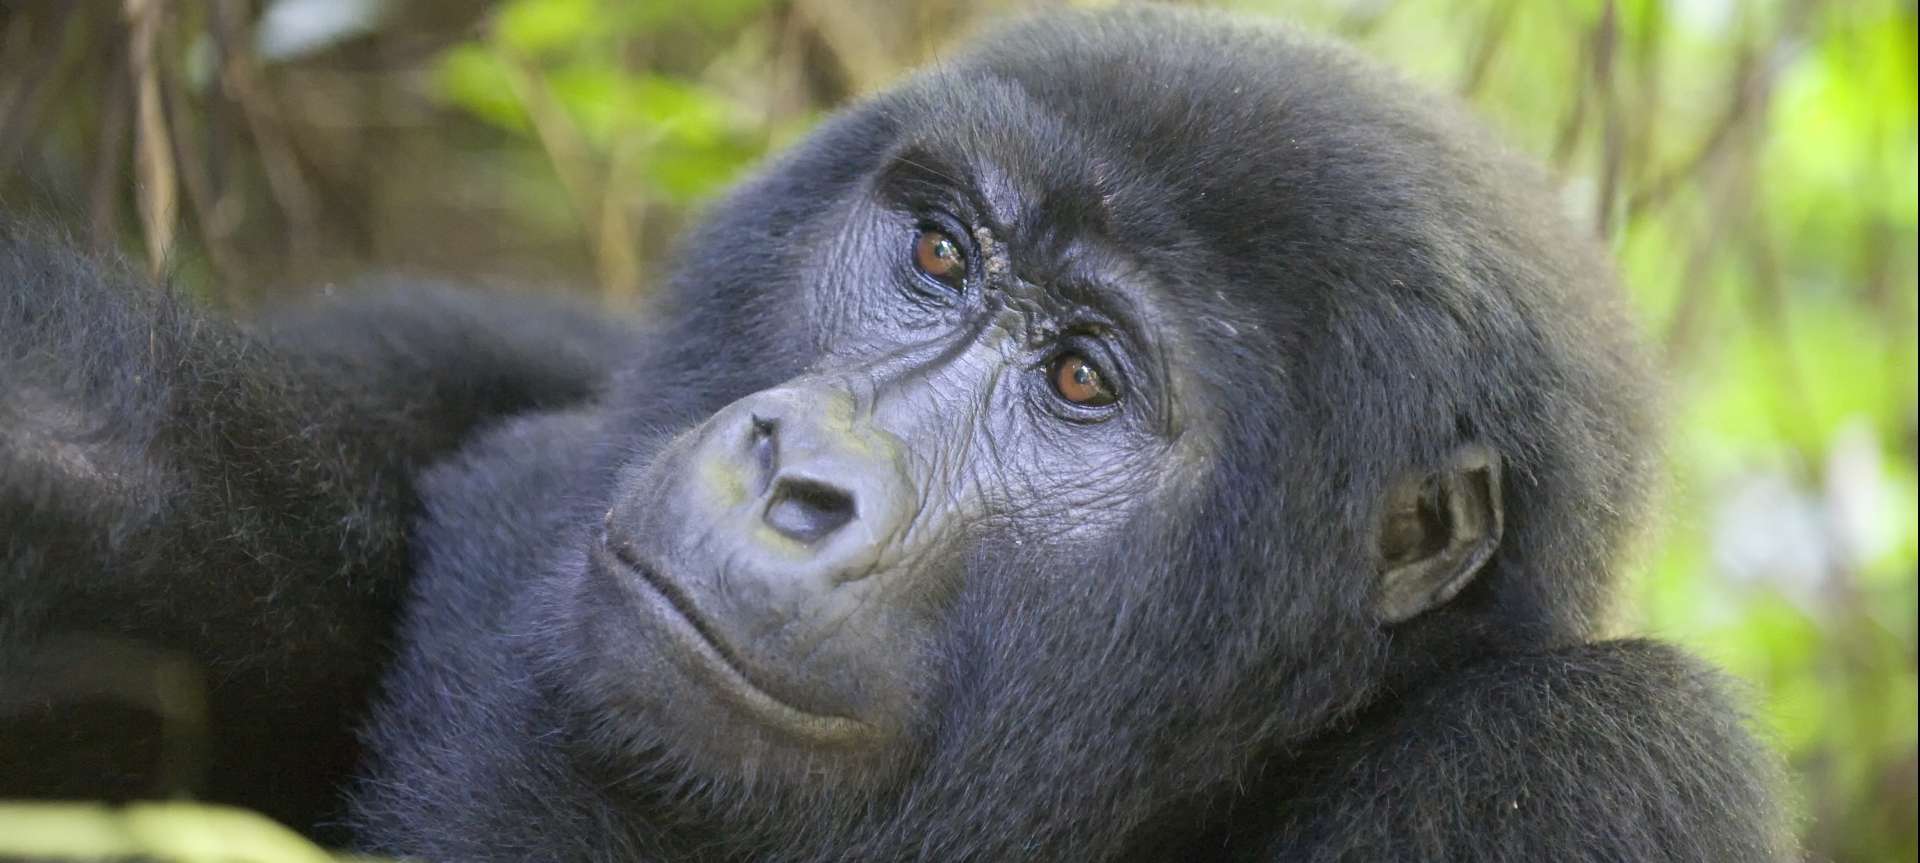 Mountain gorilla trekking in Africa - Africa Wildlife Safaris